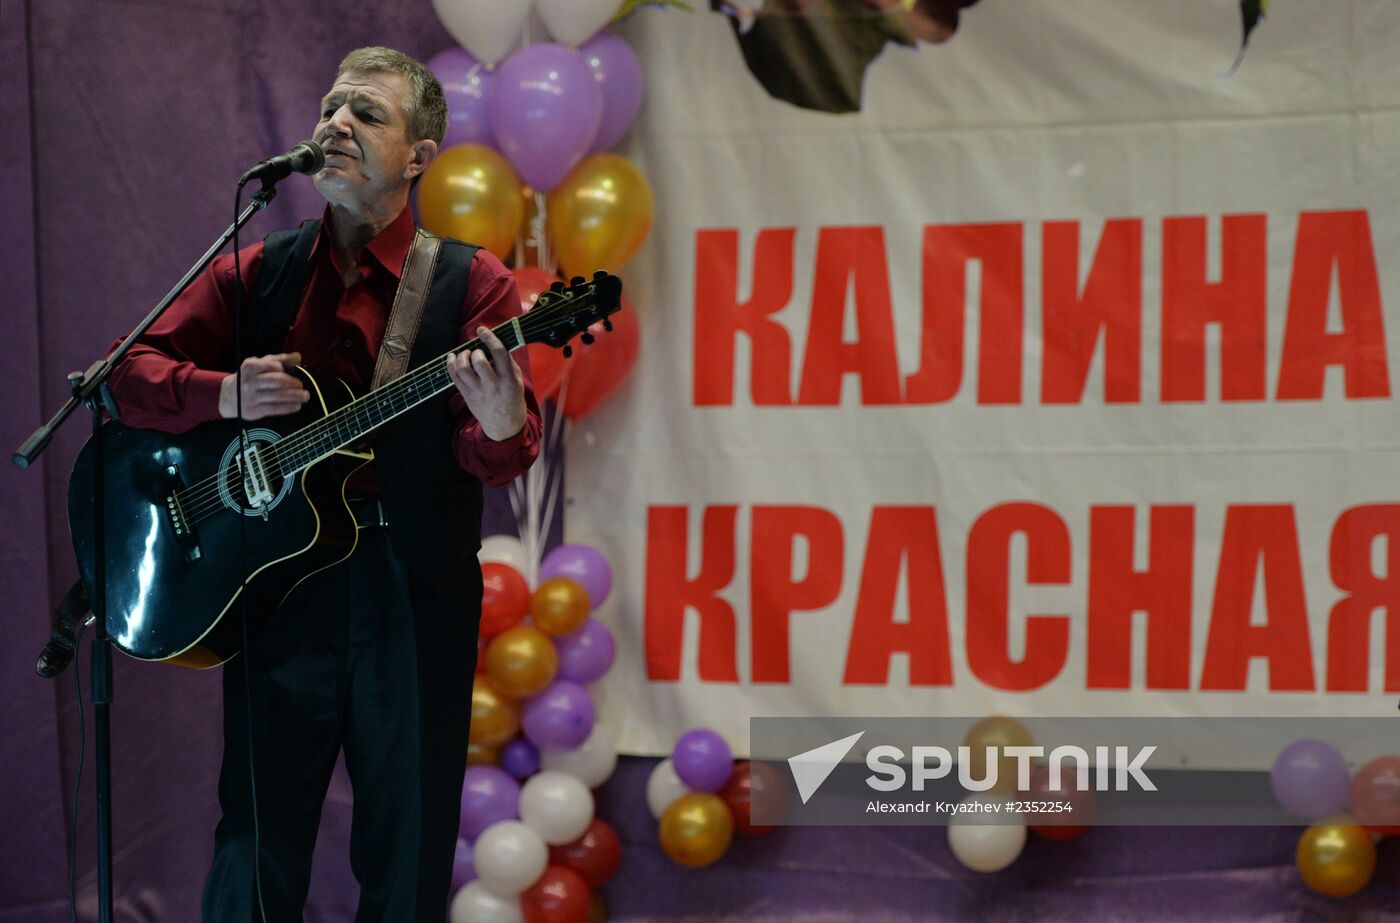 Kalina Krasnaya Song Contest among prisoners